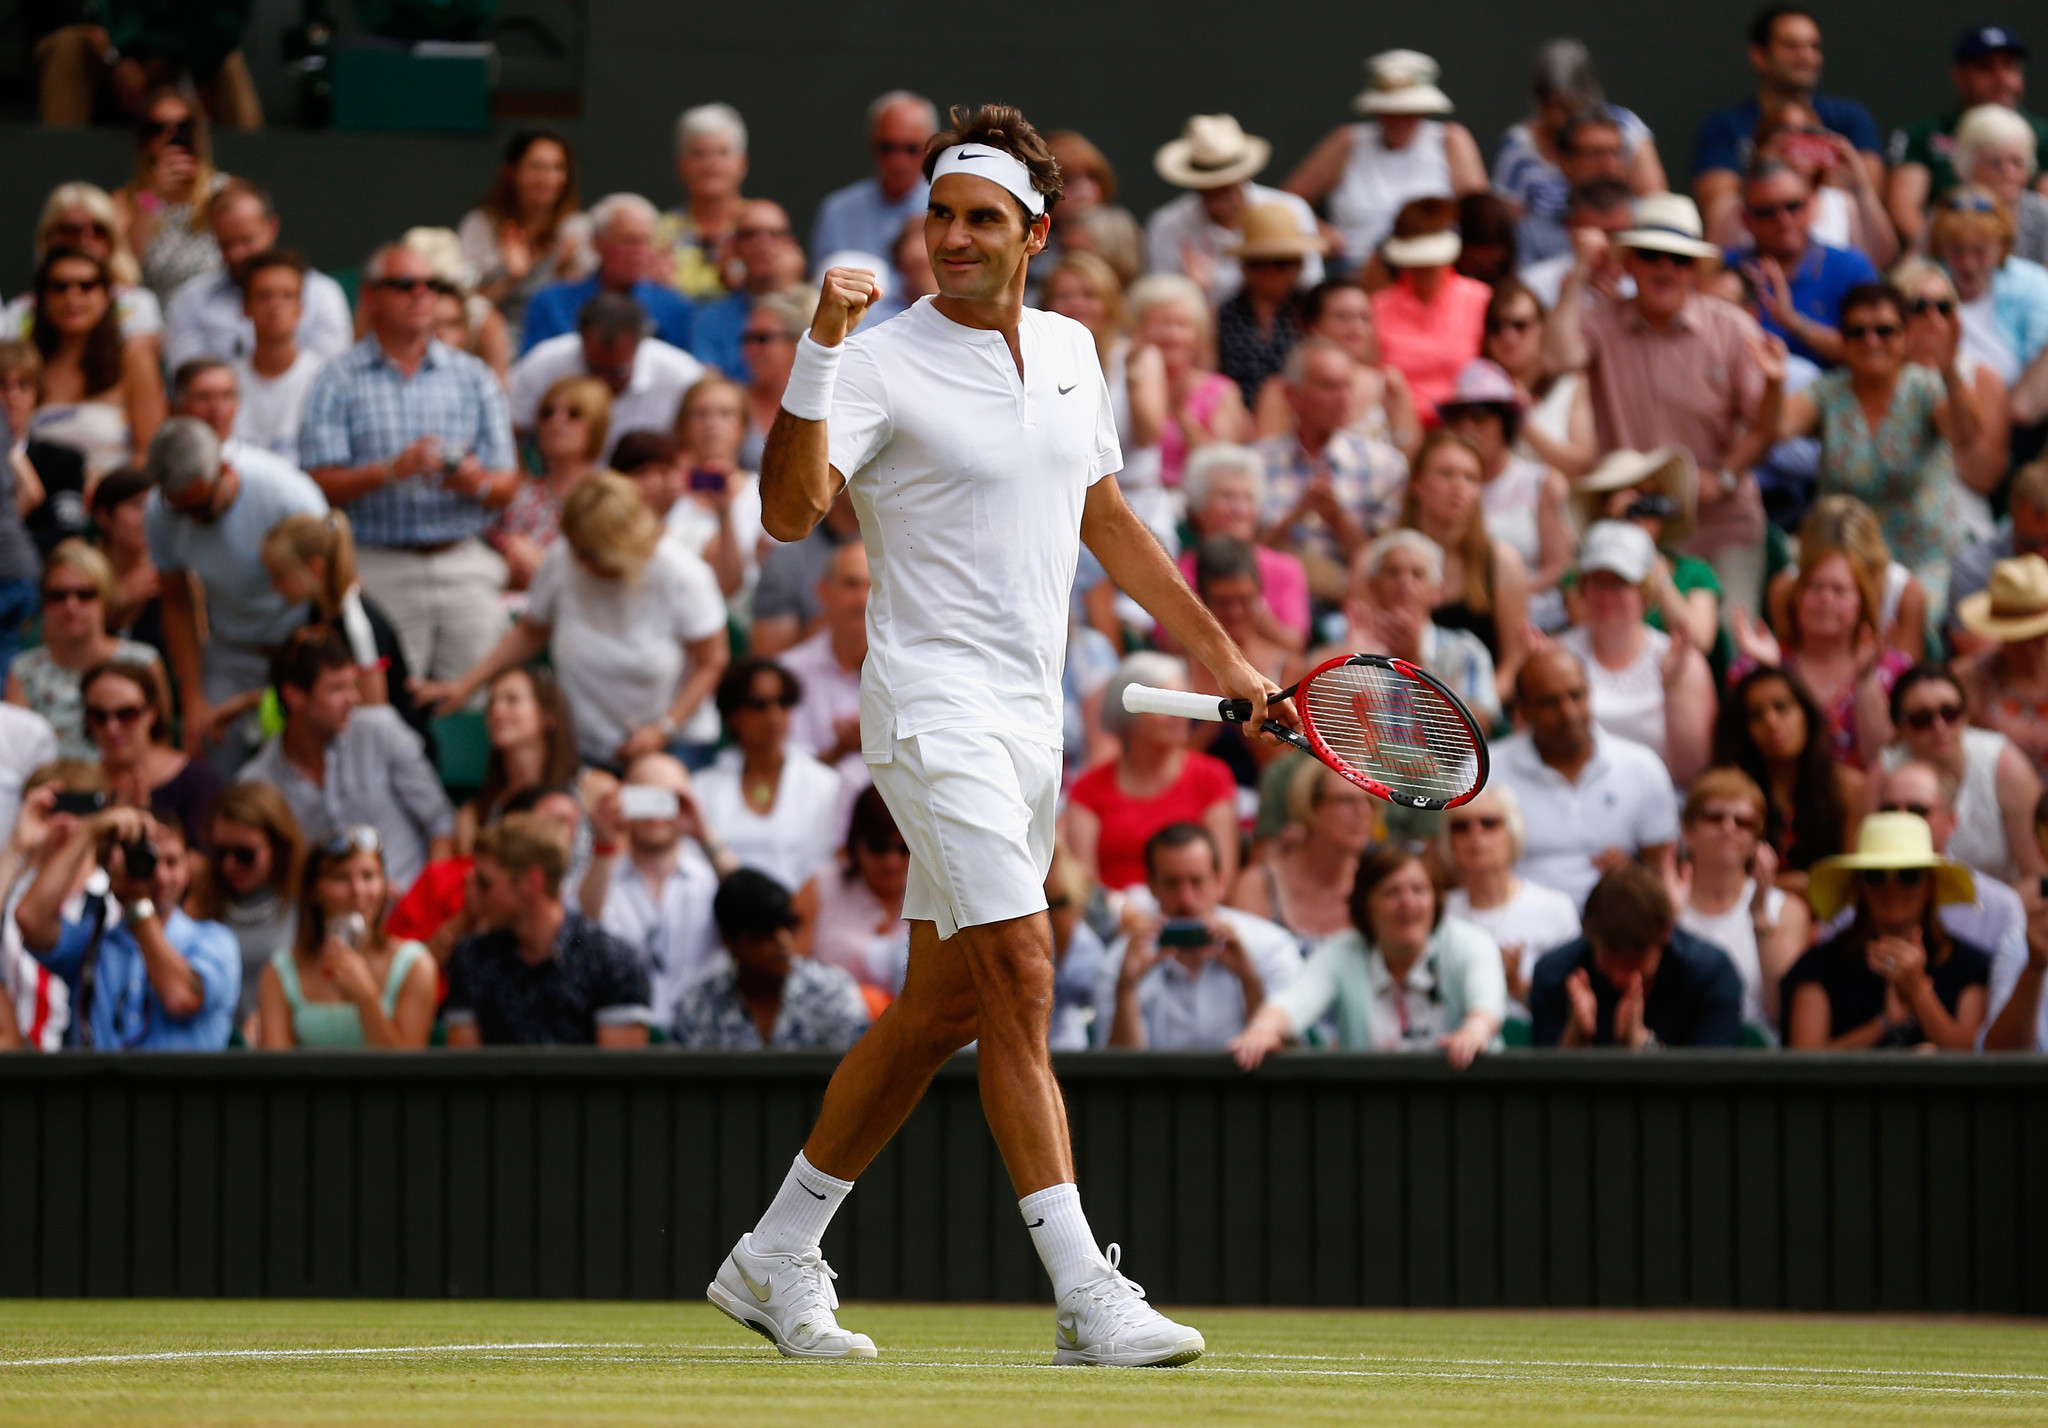 Federer beats Murray in 3 sets to reach 10th Wimbledon final - Chicago Tribune2048 x 1428